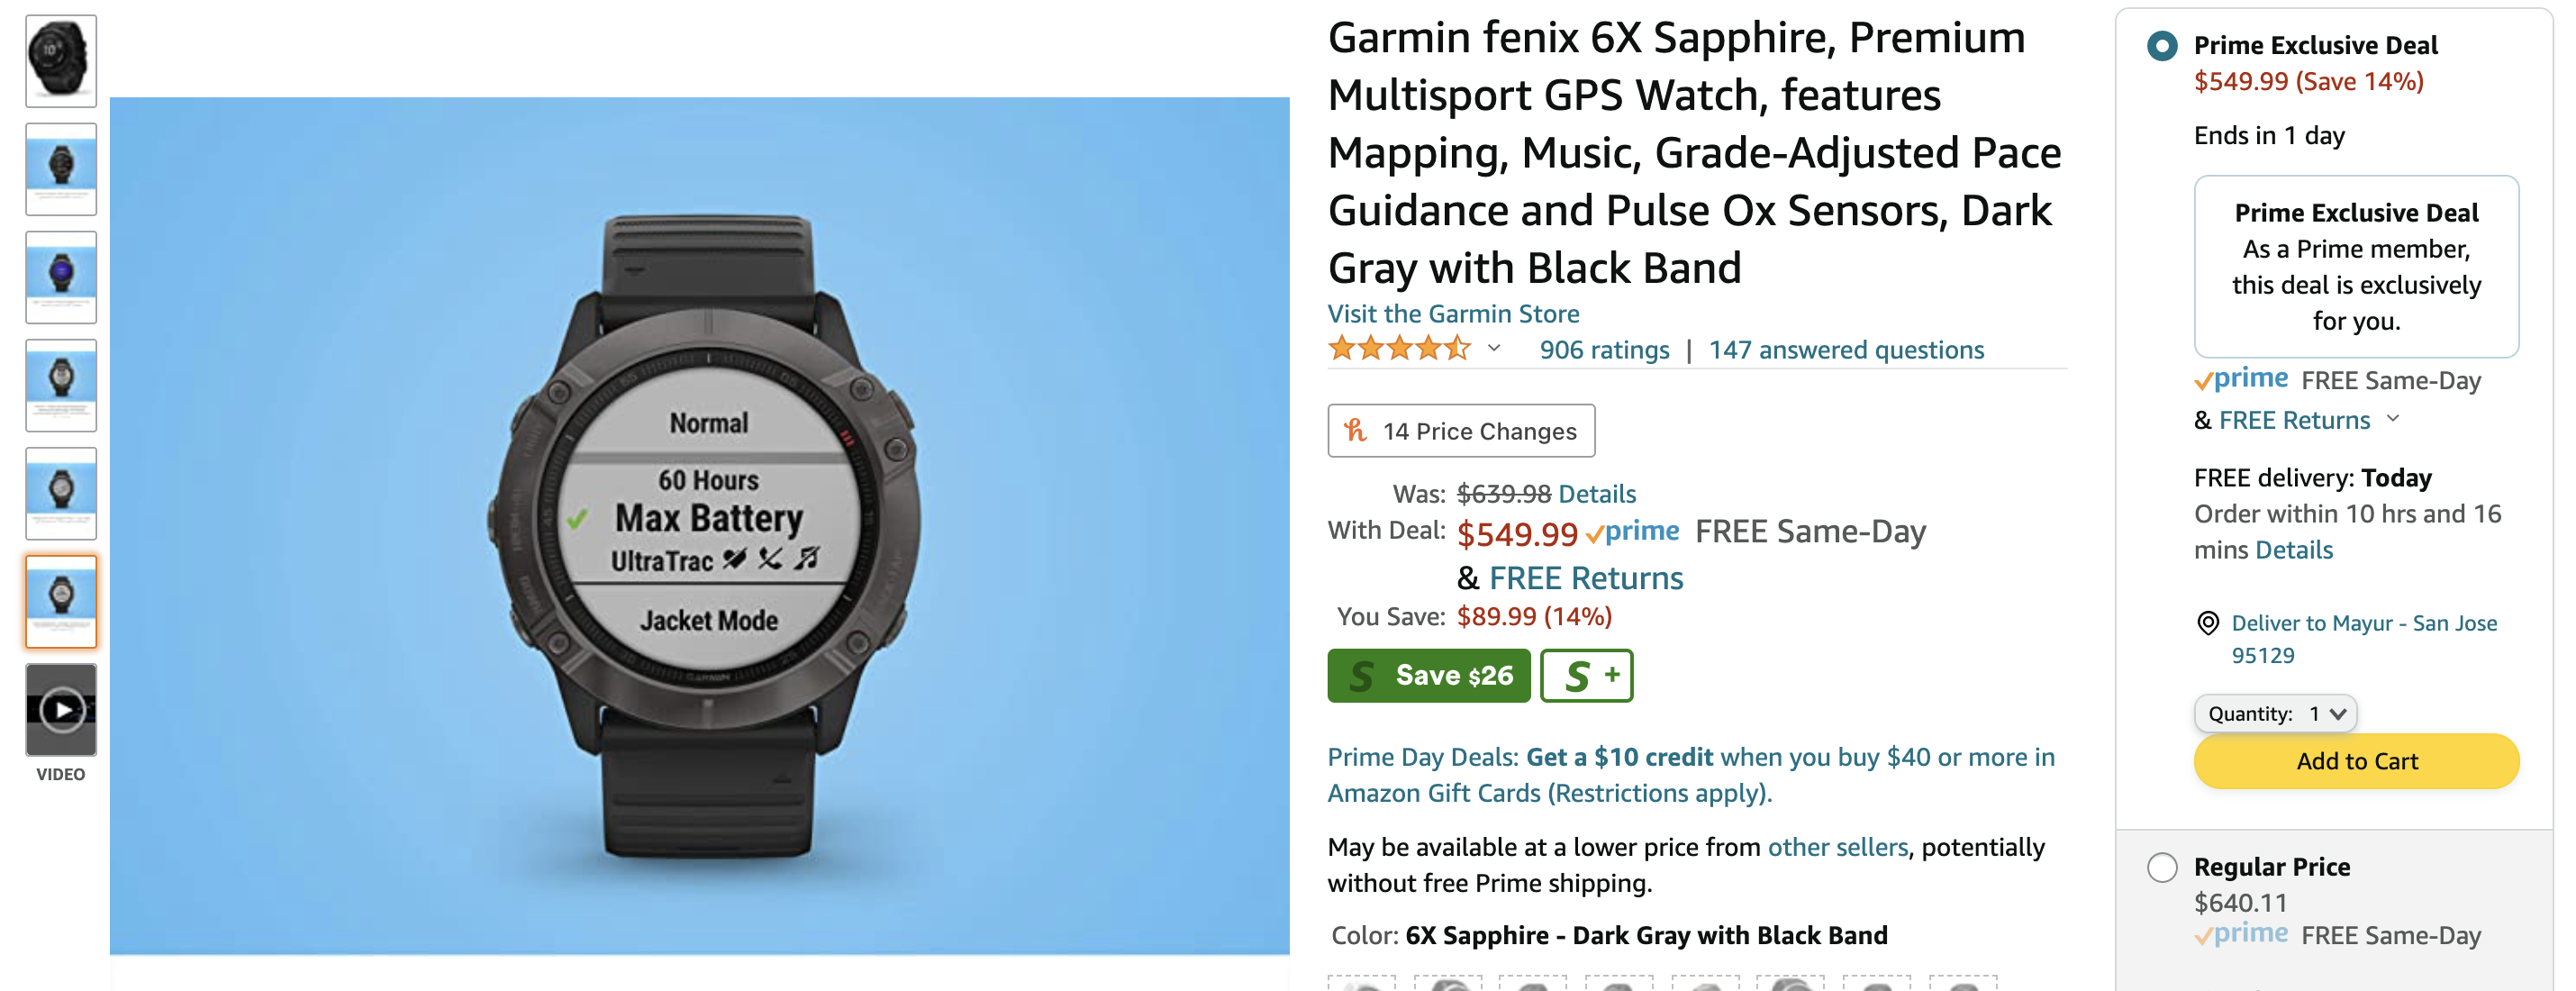 Garmin fenix 6X Sapphire, Premium Multisport GPS Watch New $549.99